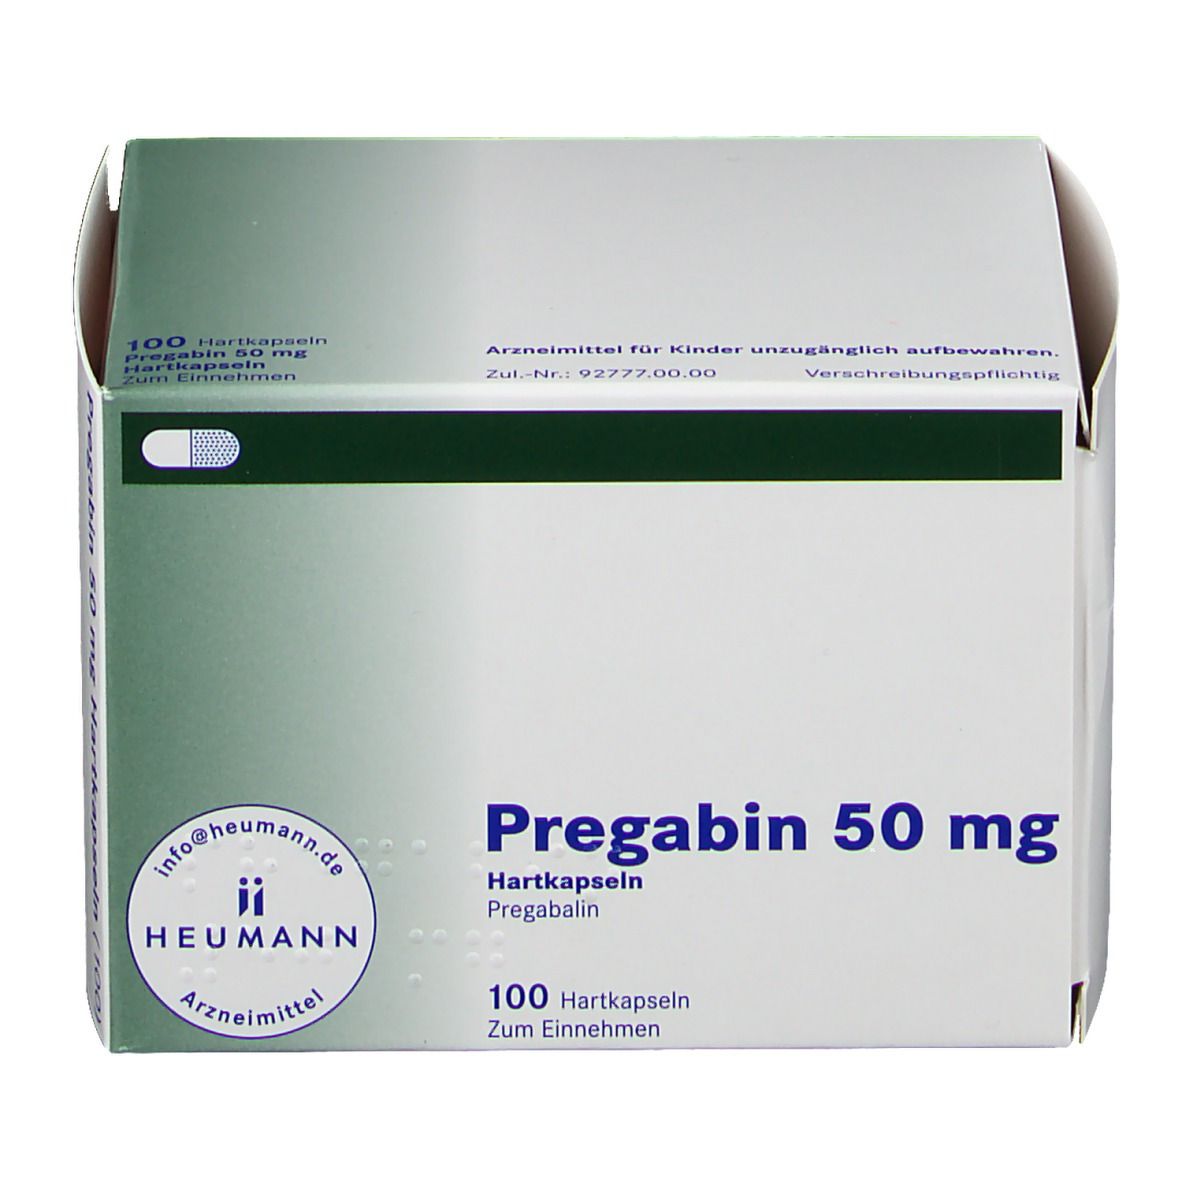 Pregabin 50 mg